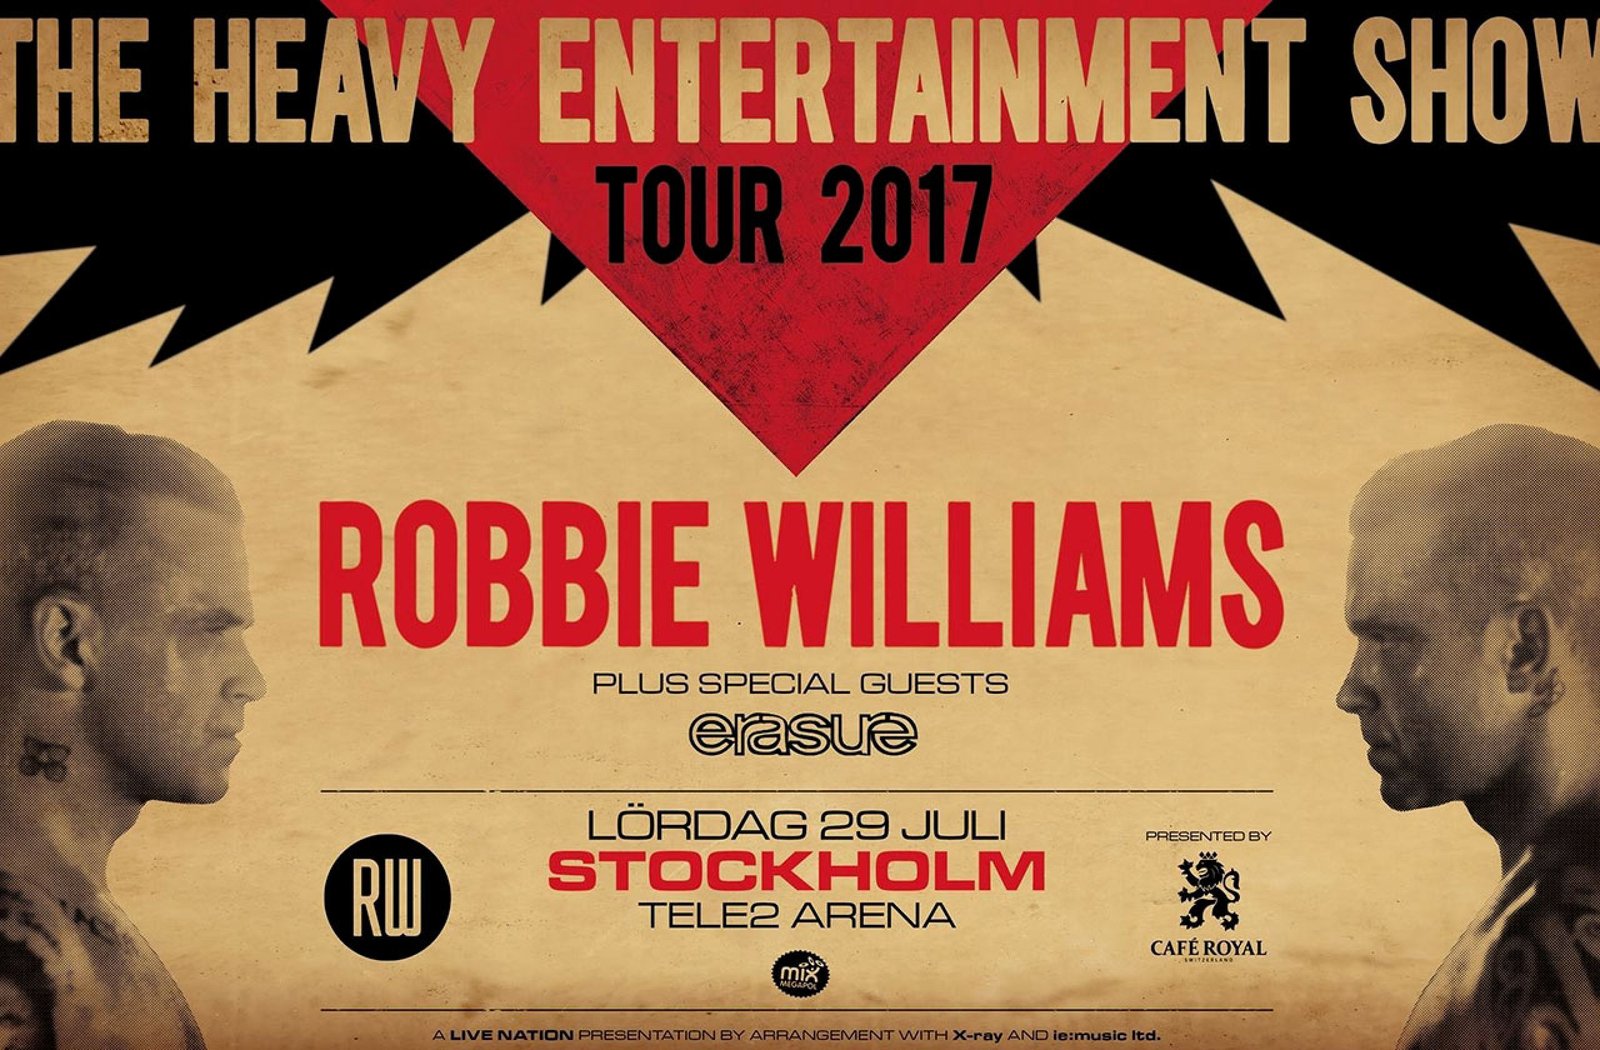 The Heavy Entertainment Show Tour